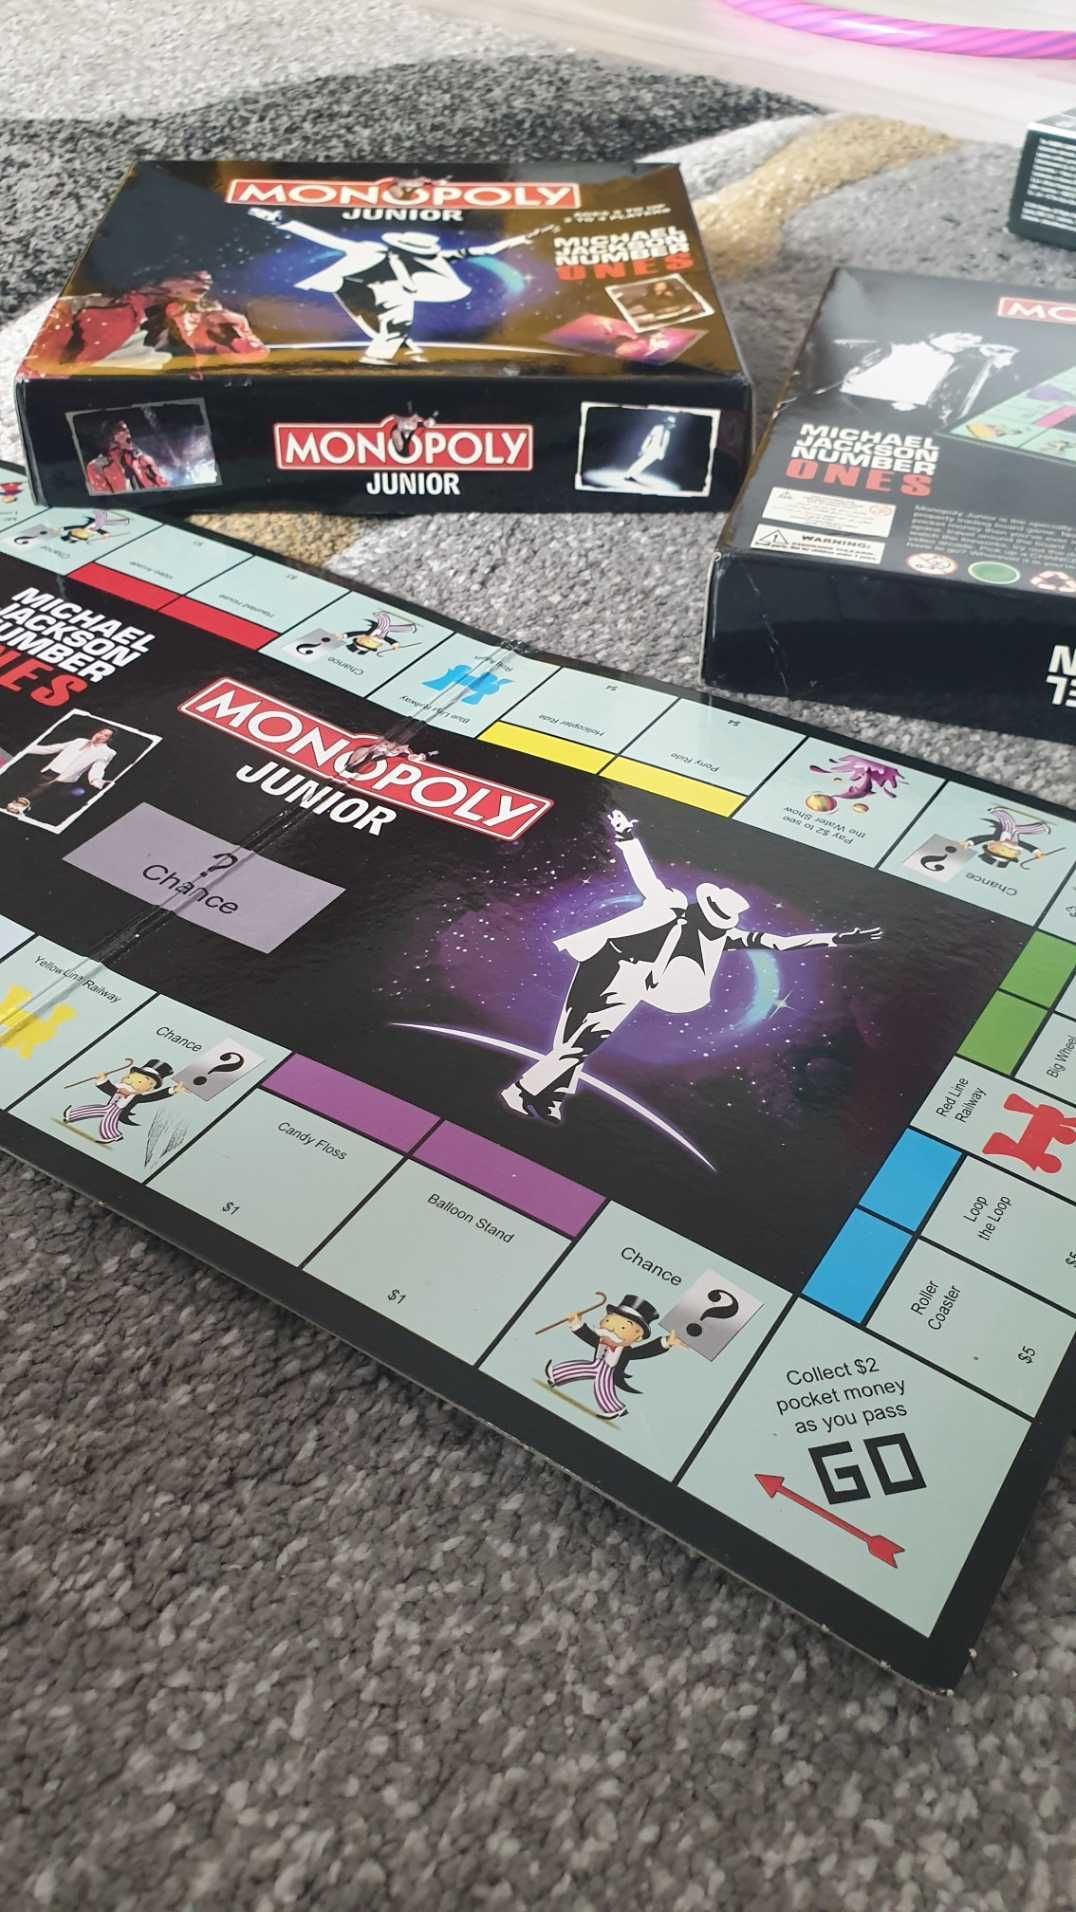 Michael Jackson Monopoly